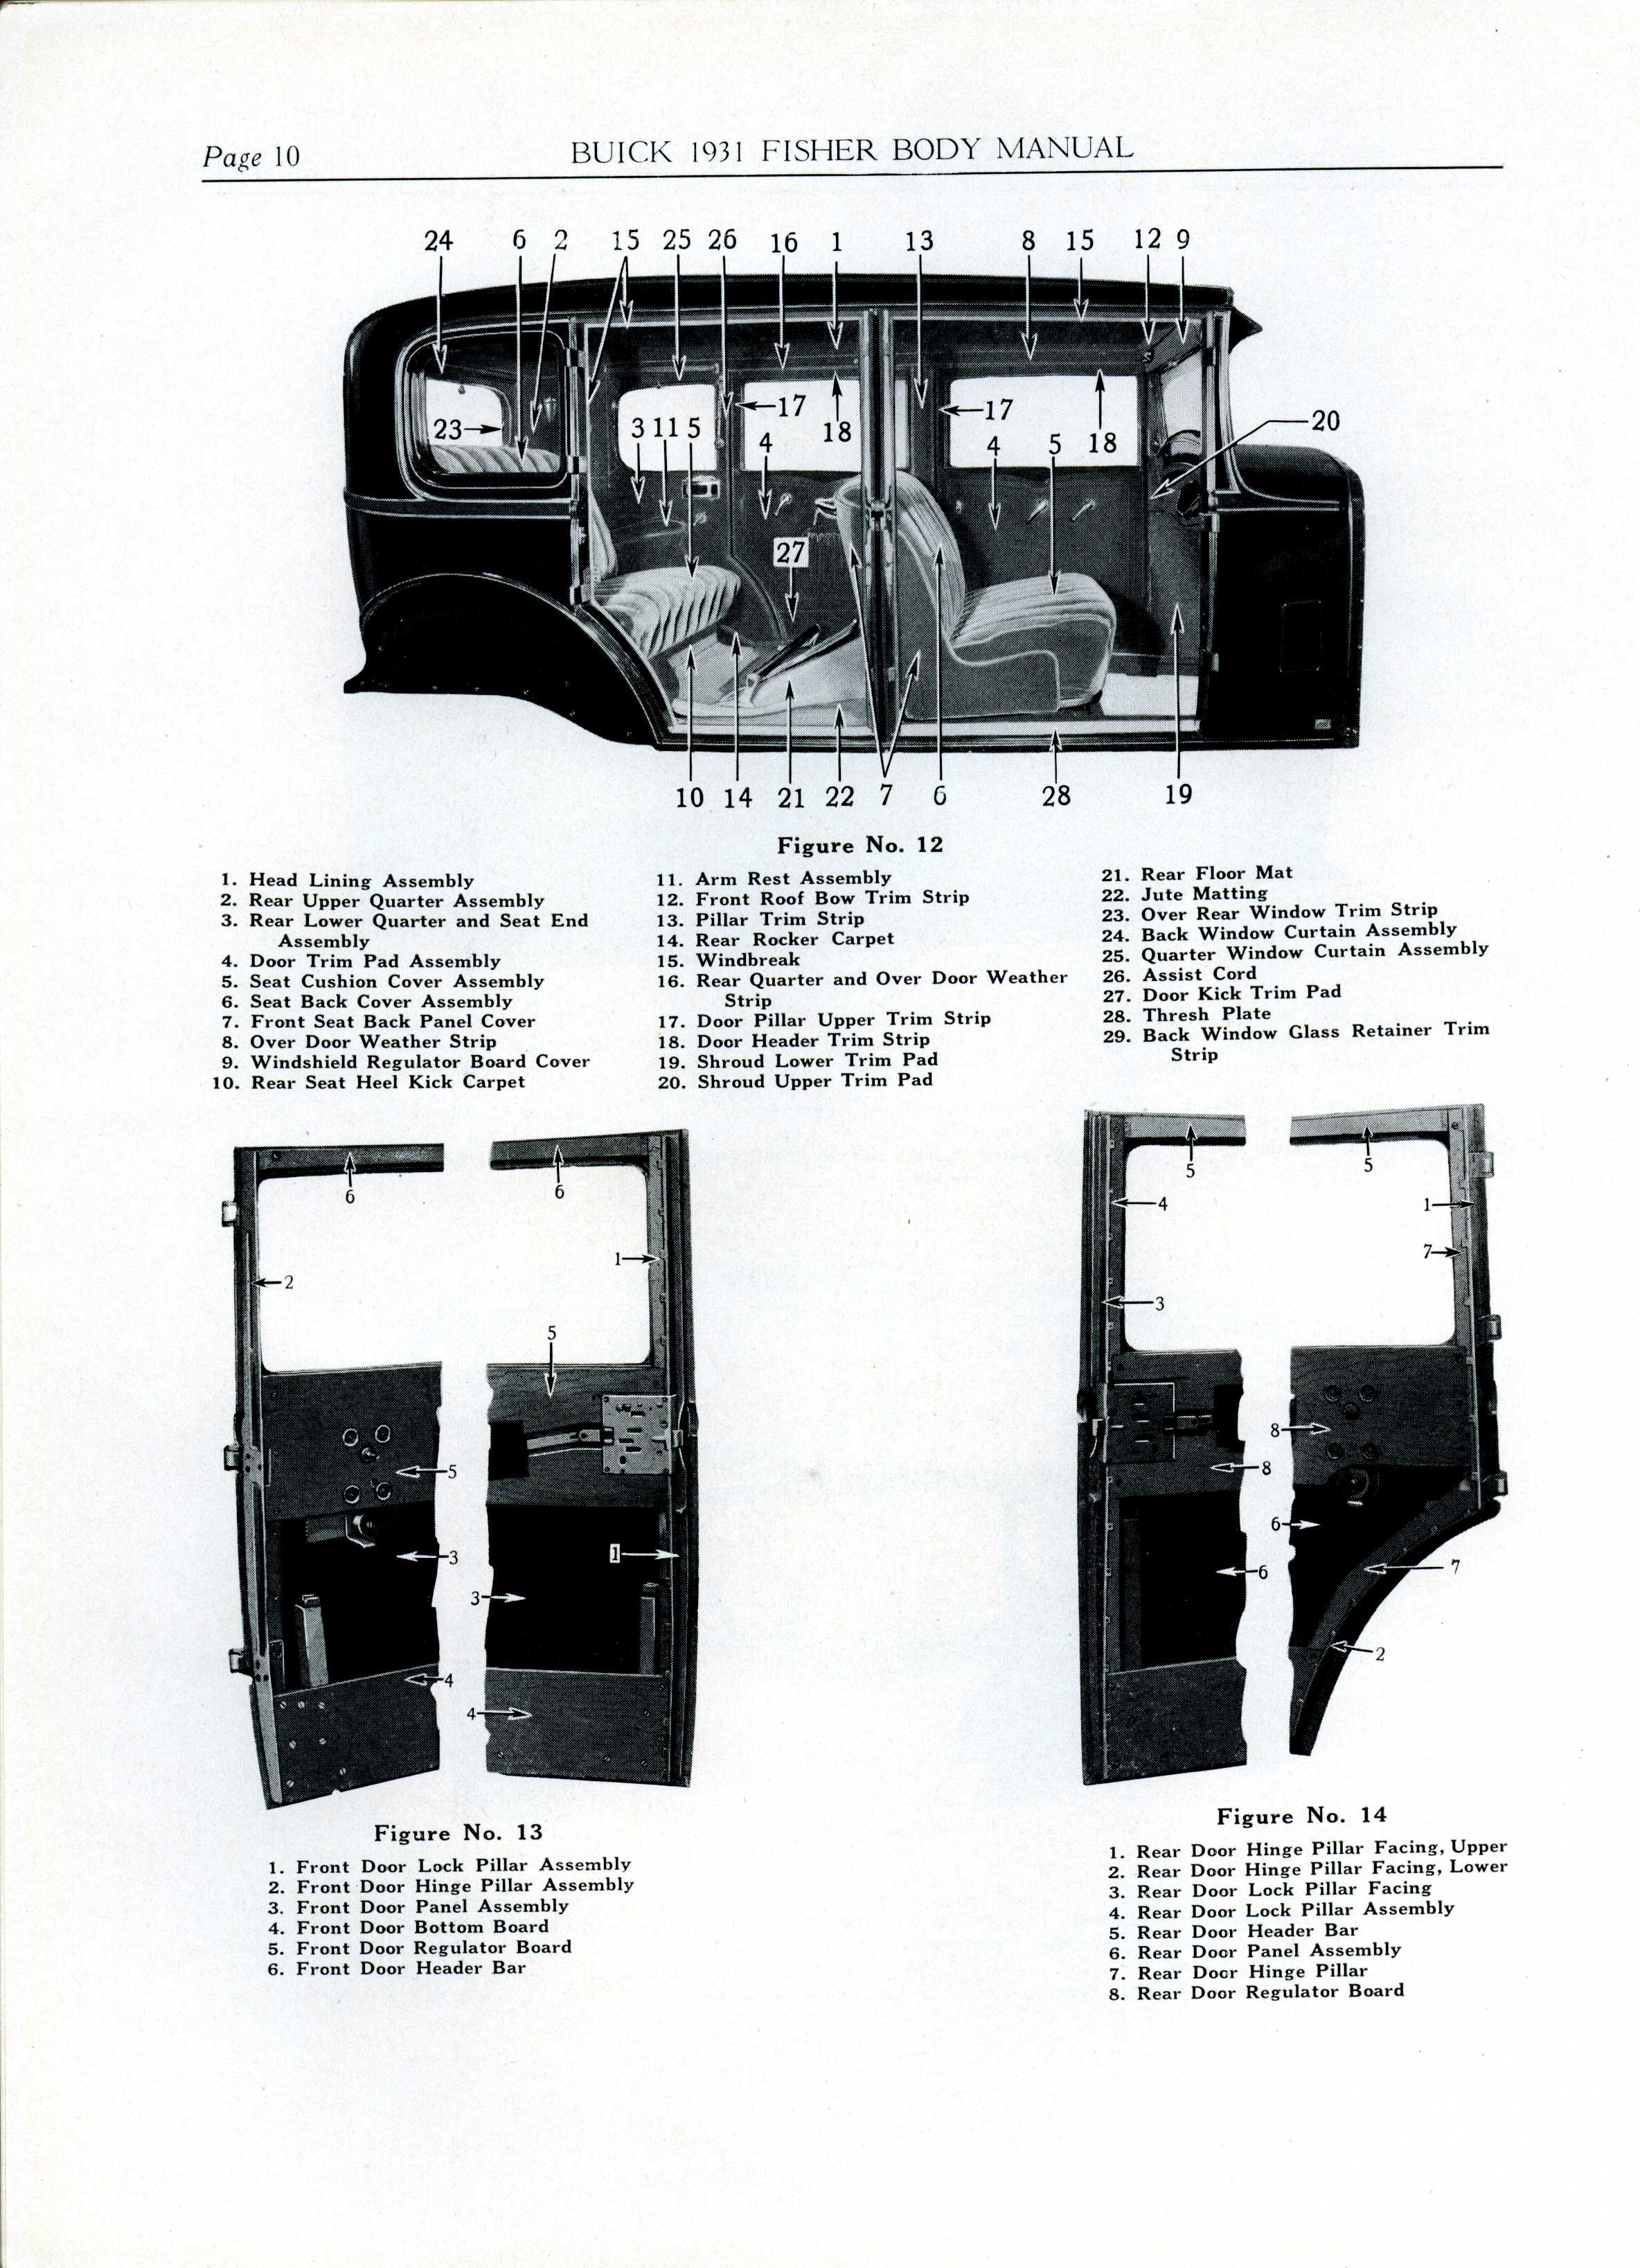 1931 Buick Fisher Body Manual-10